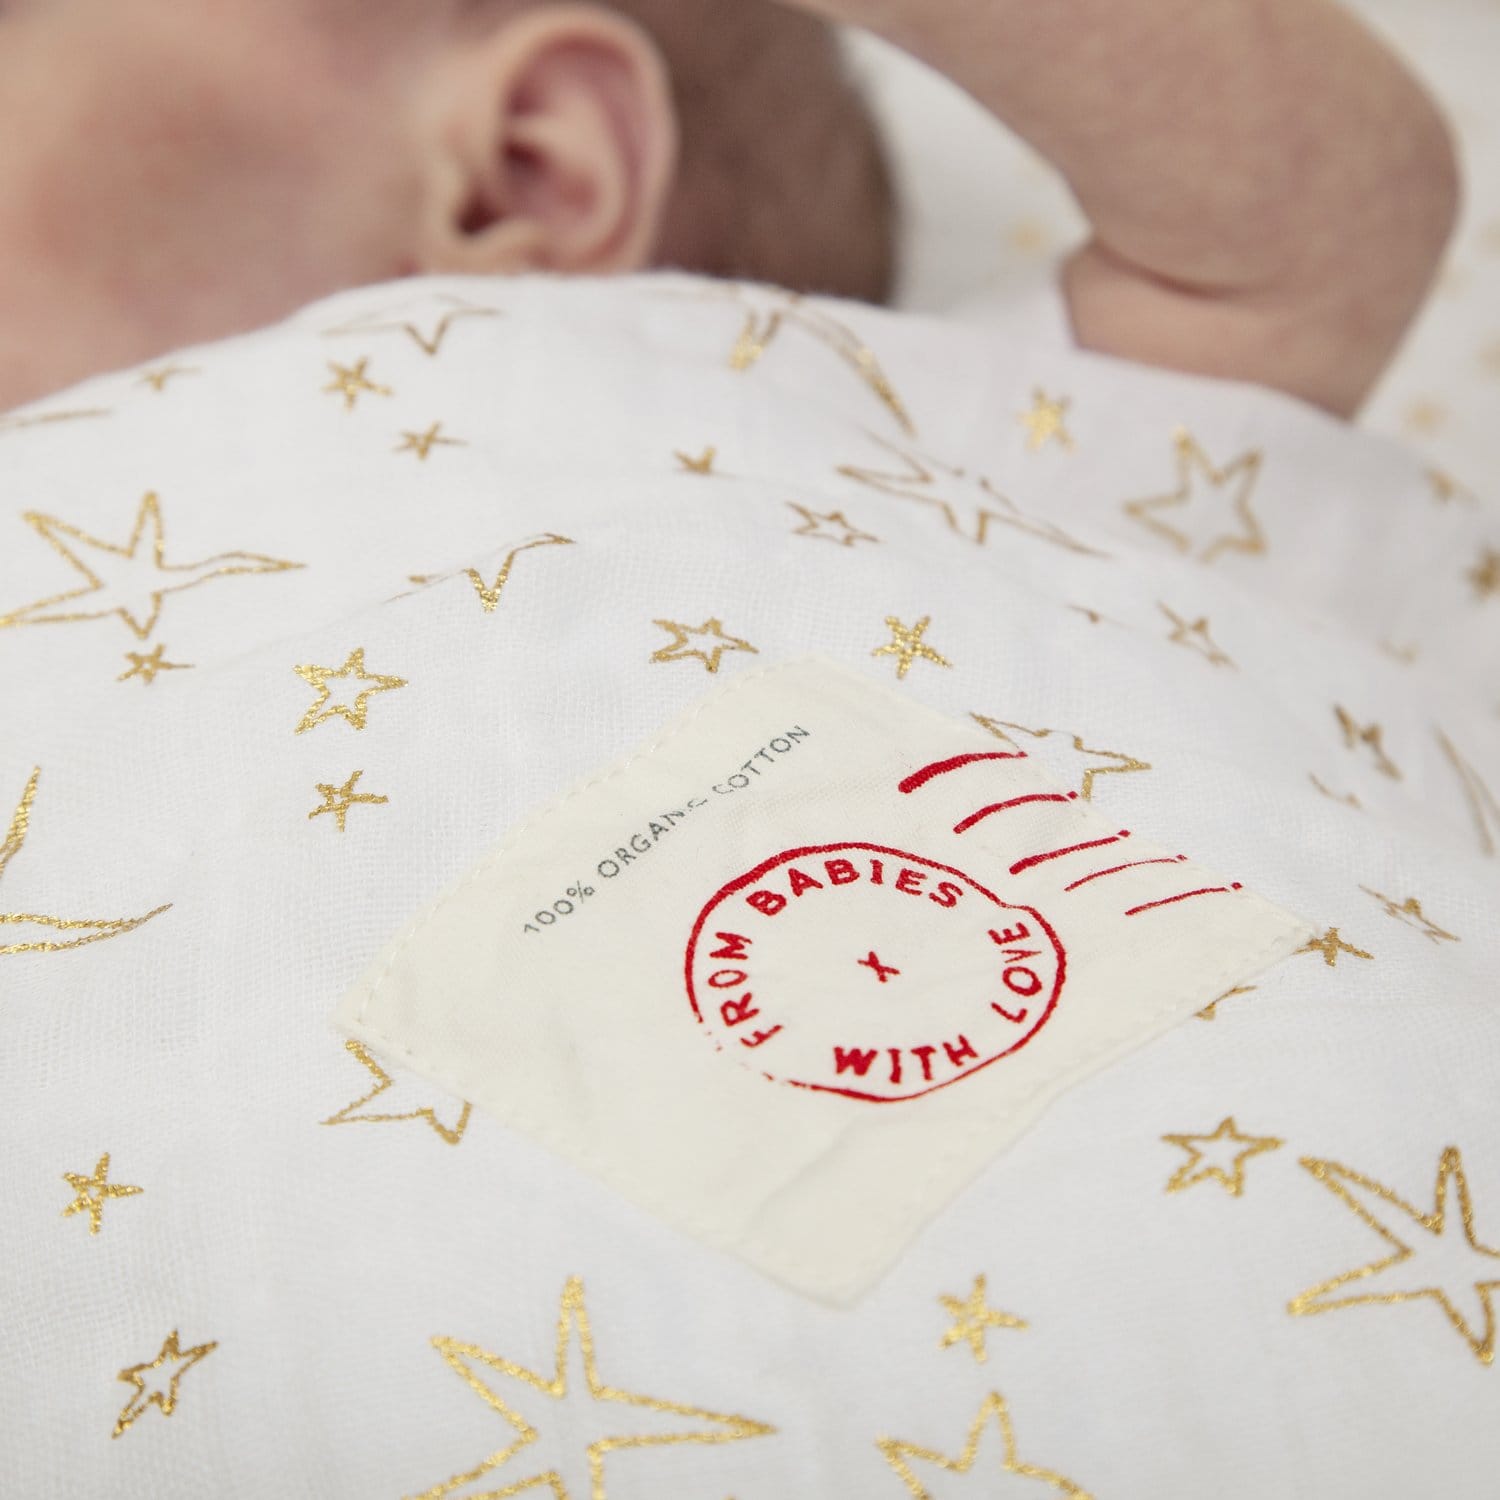 Little Star Organic Baby Gift Set - Jumbo